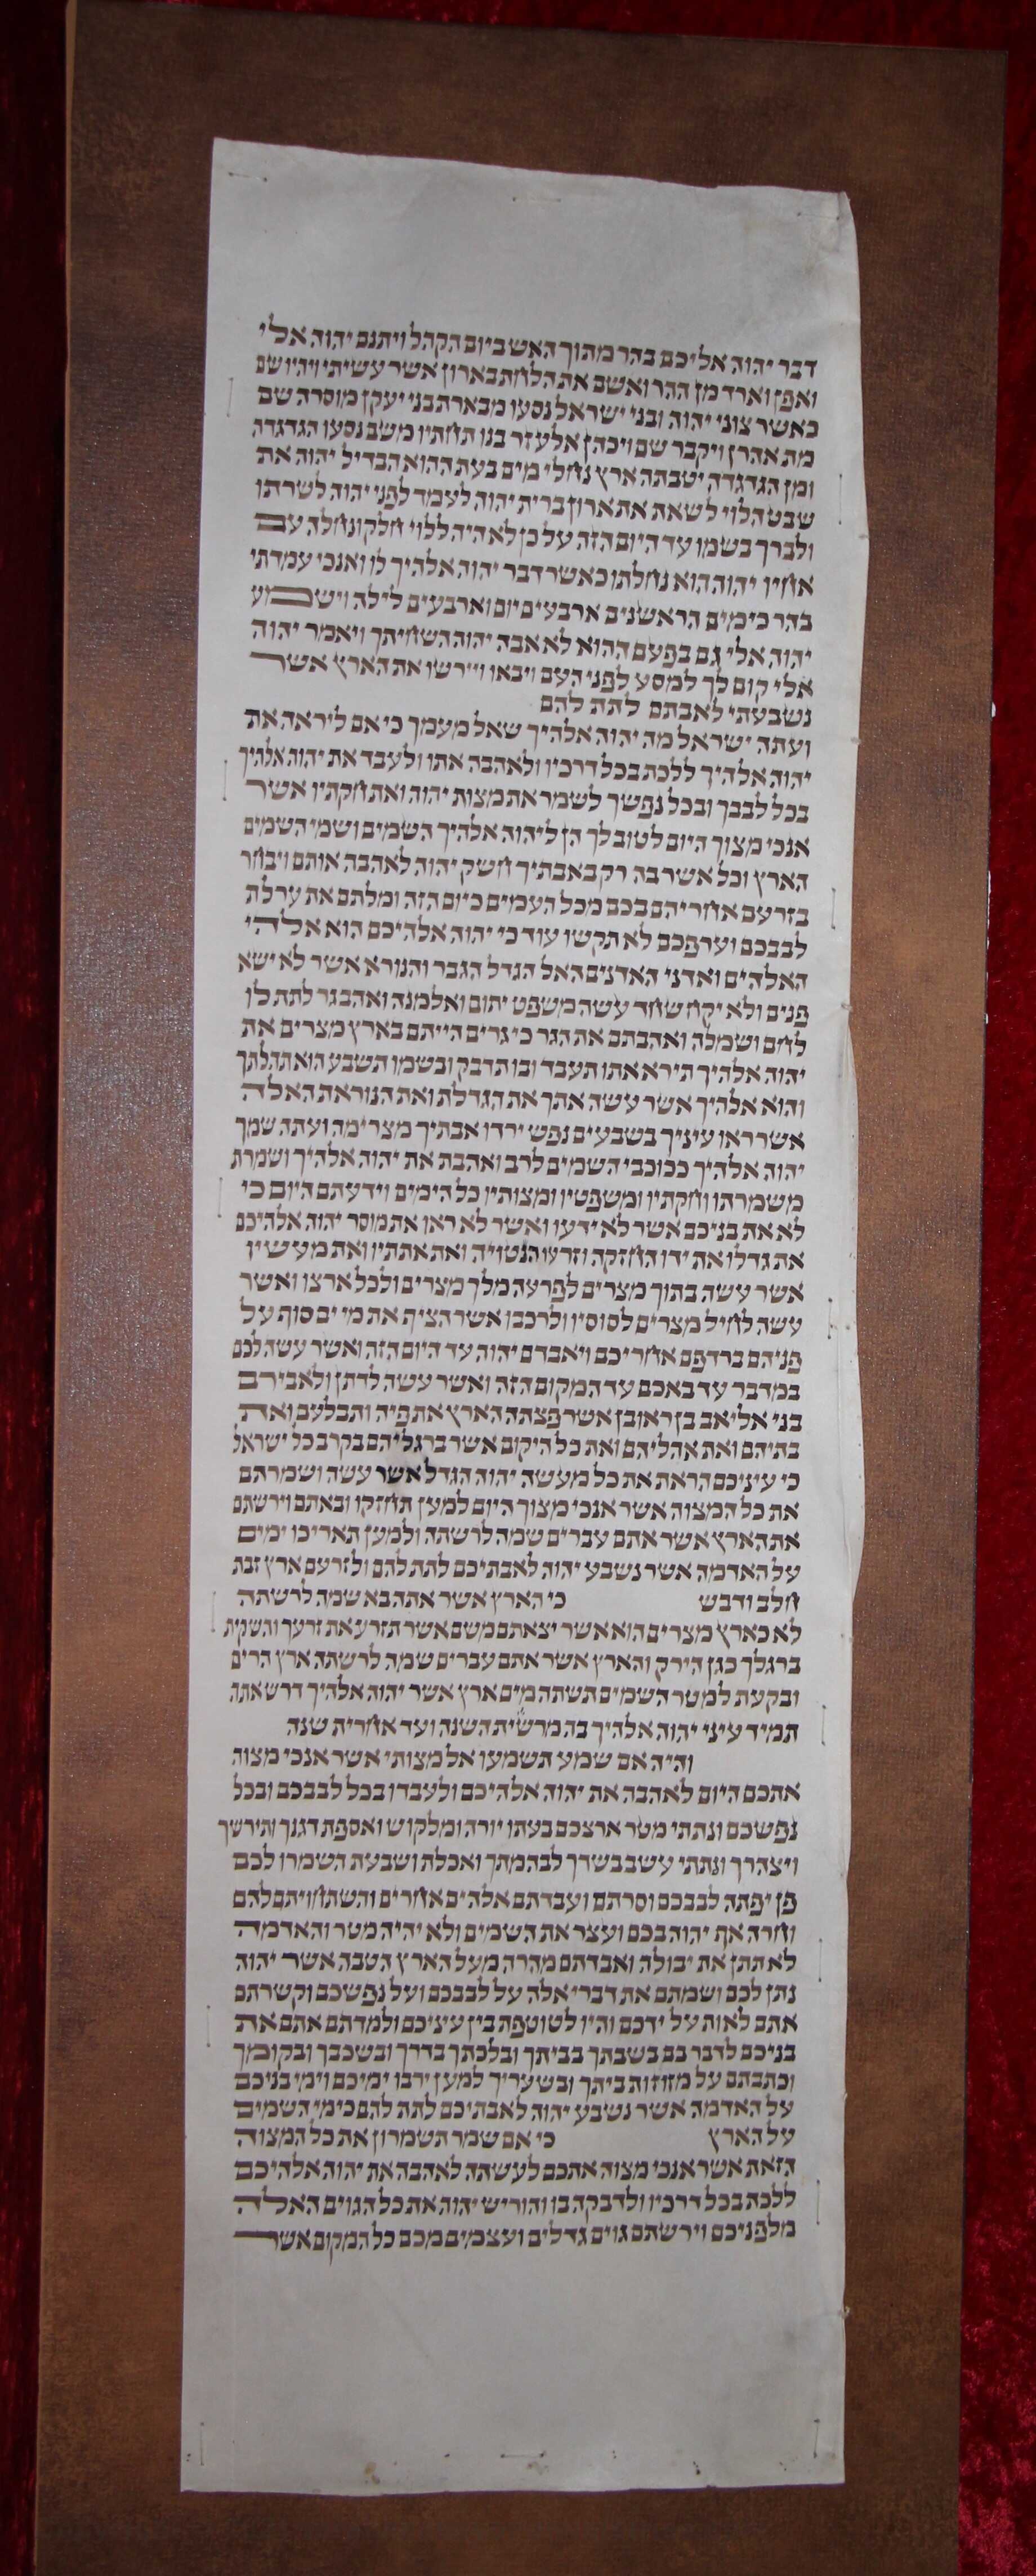 Torah Sheet Column Deuteronomy 10:4 through Deuteronomy 11:23